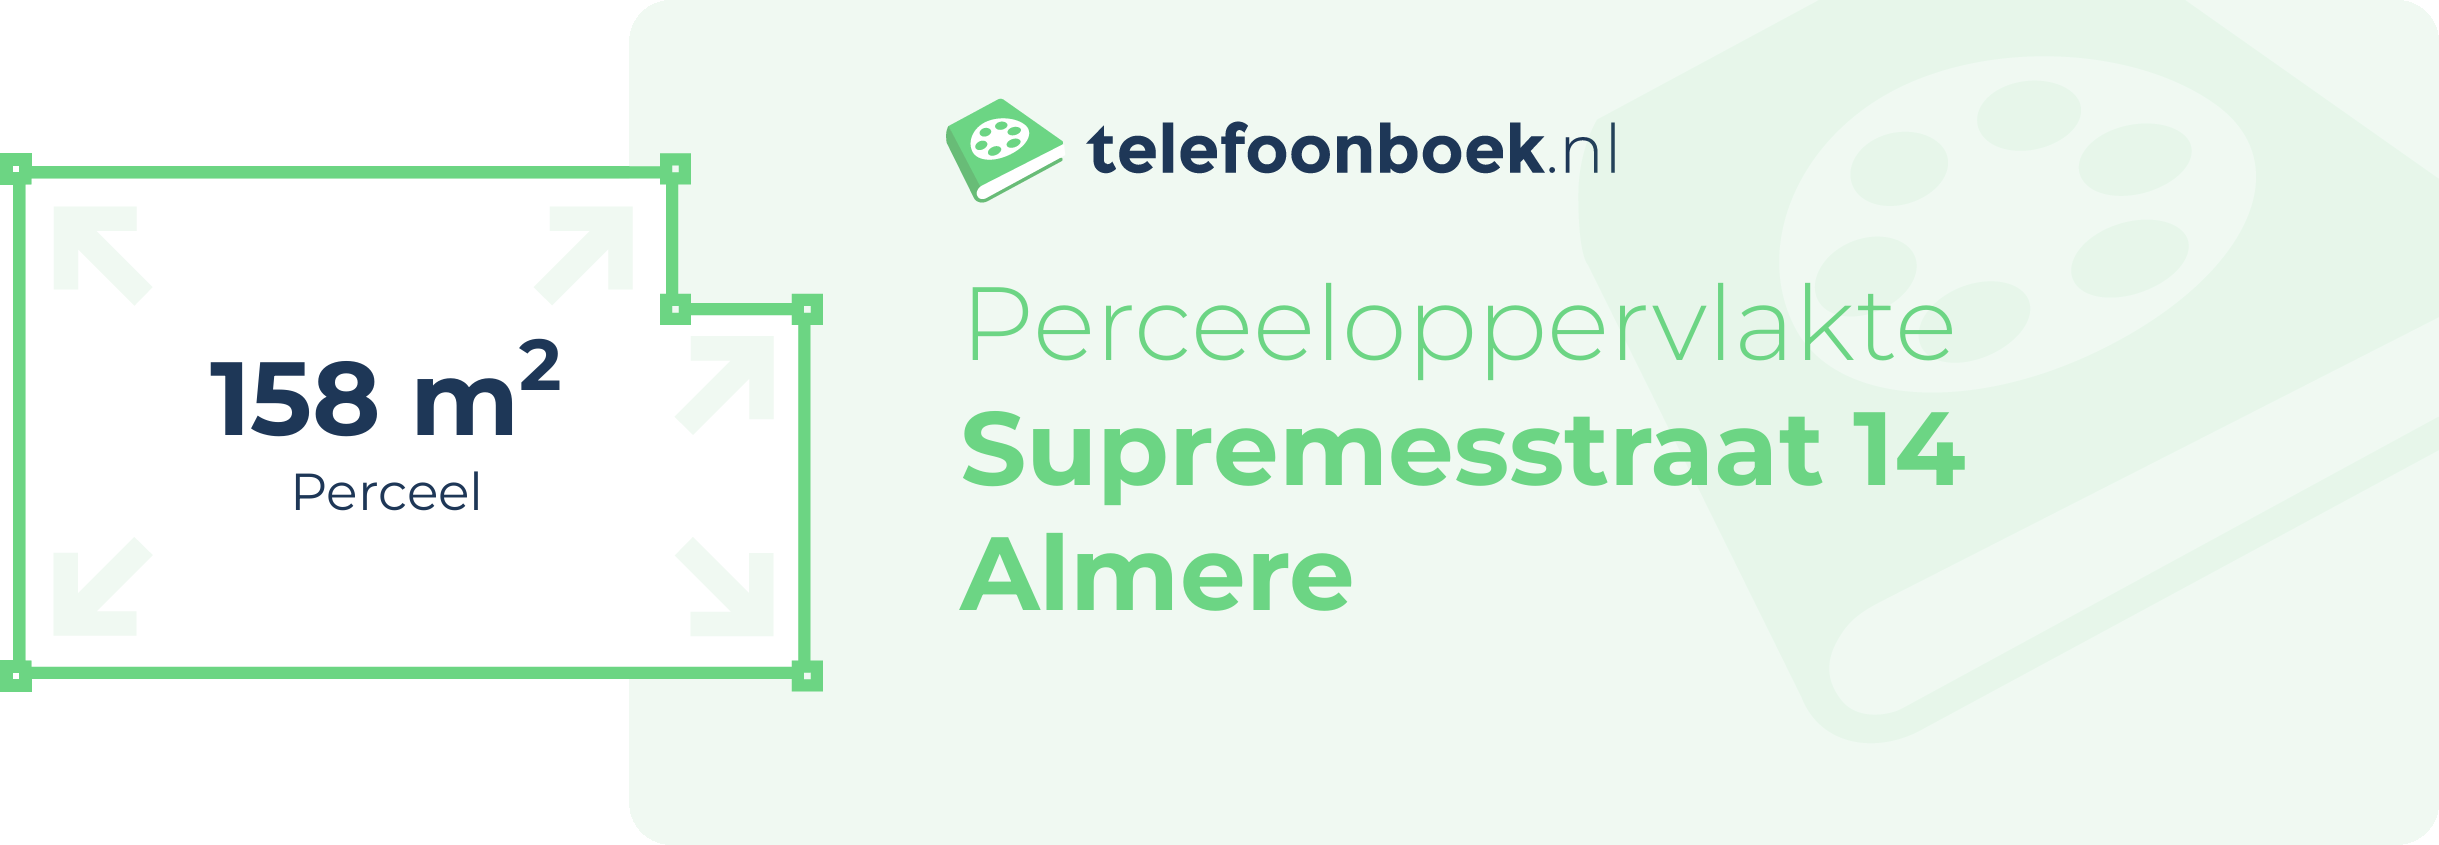 Perceeloppervlakte Supremesstraat 14 Almere